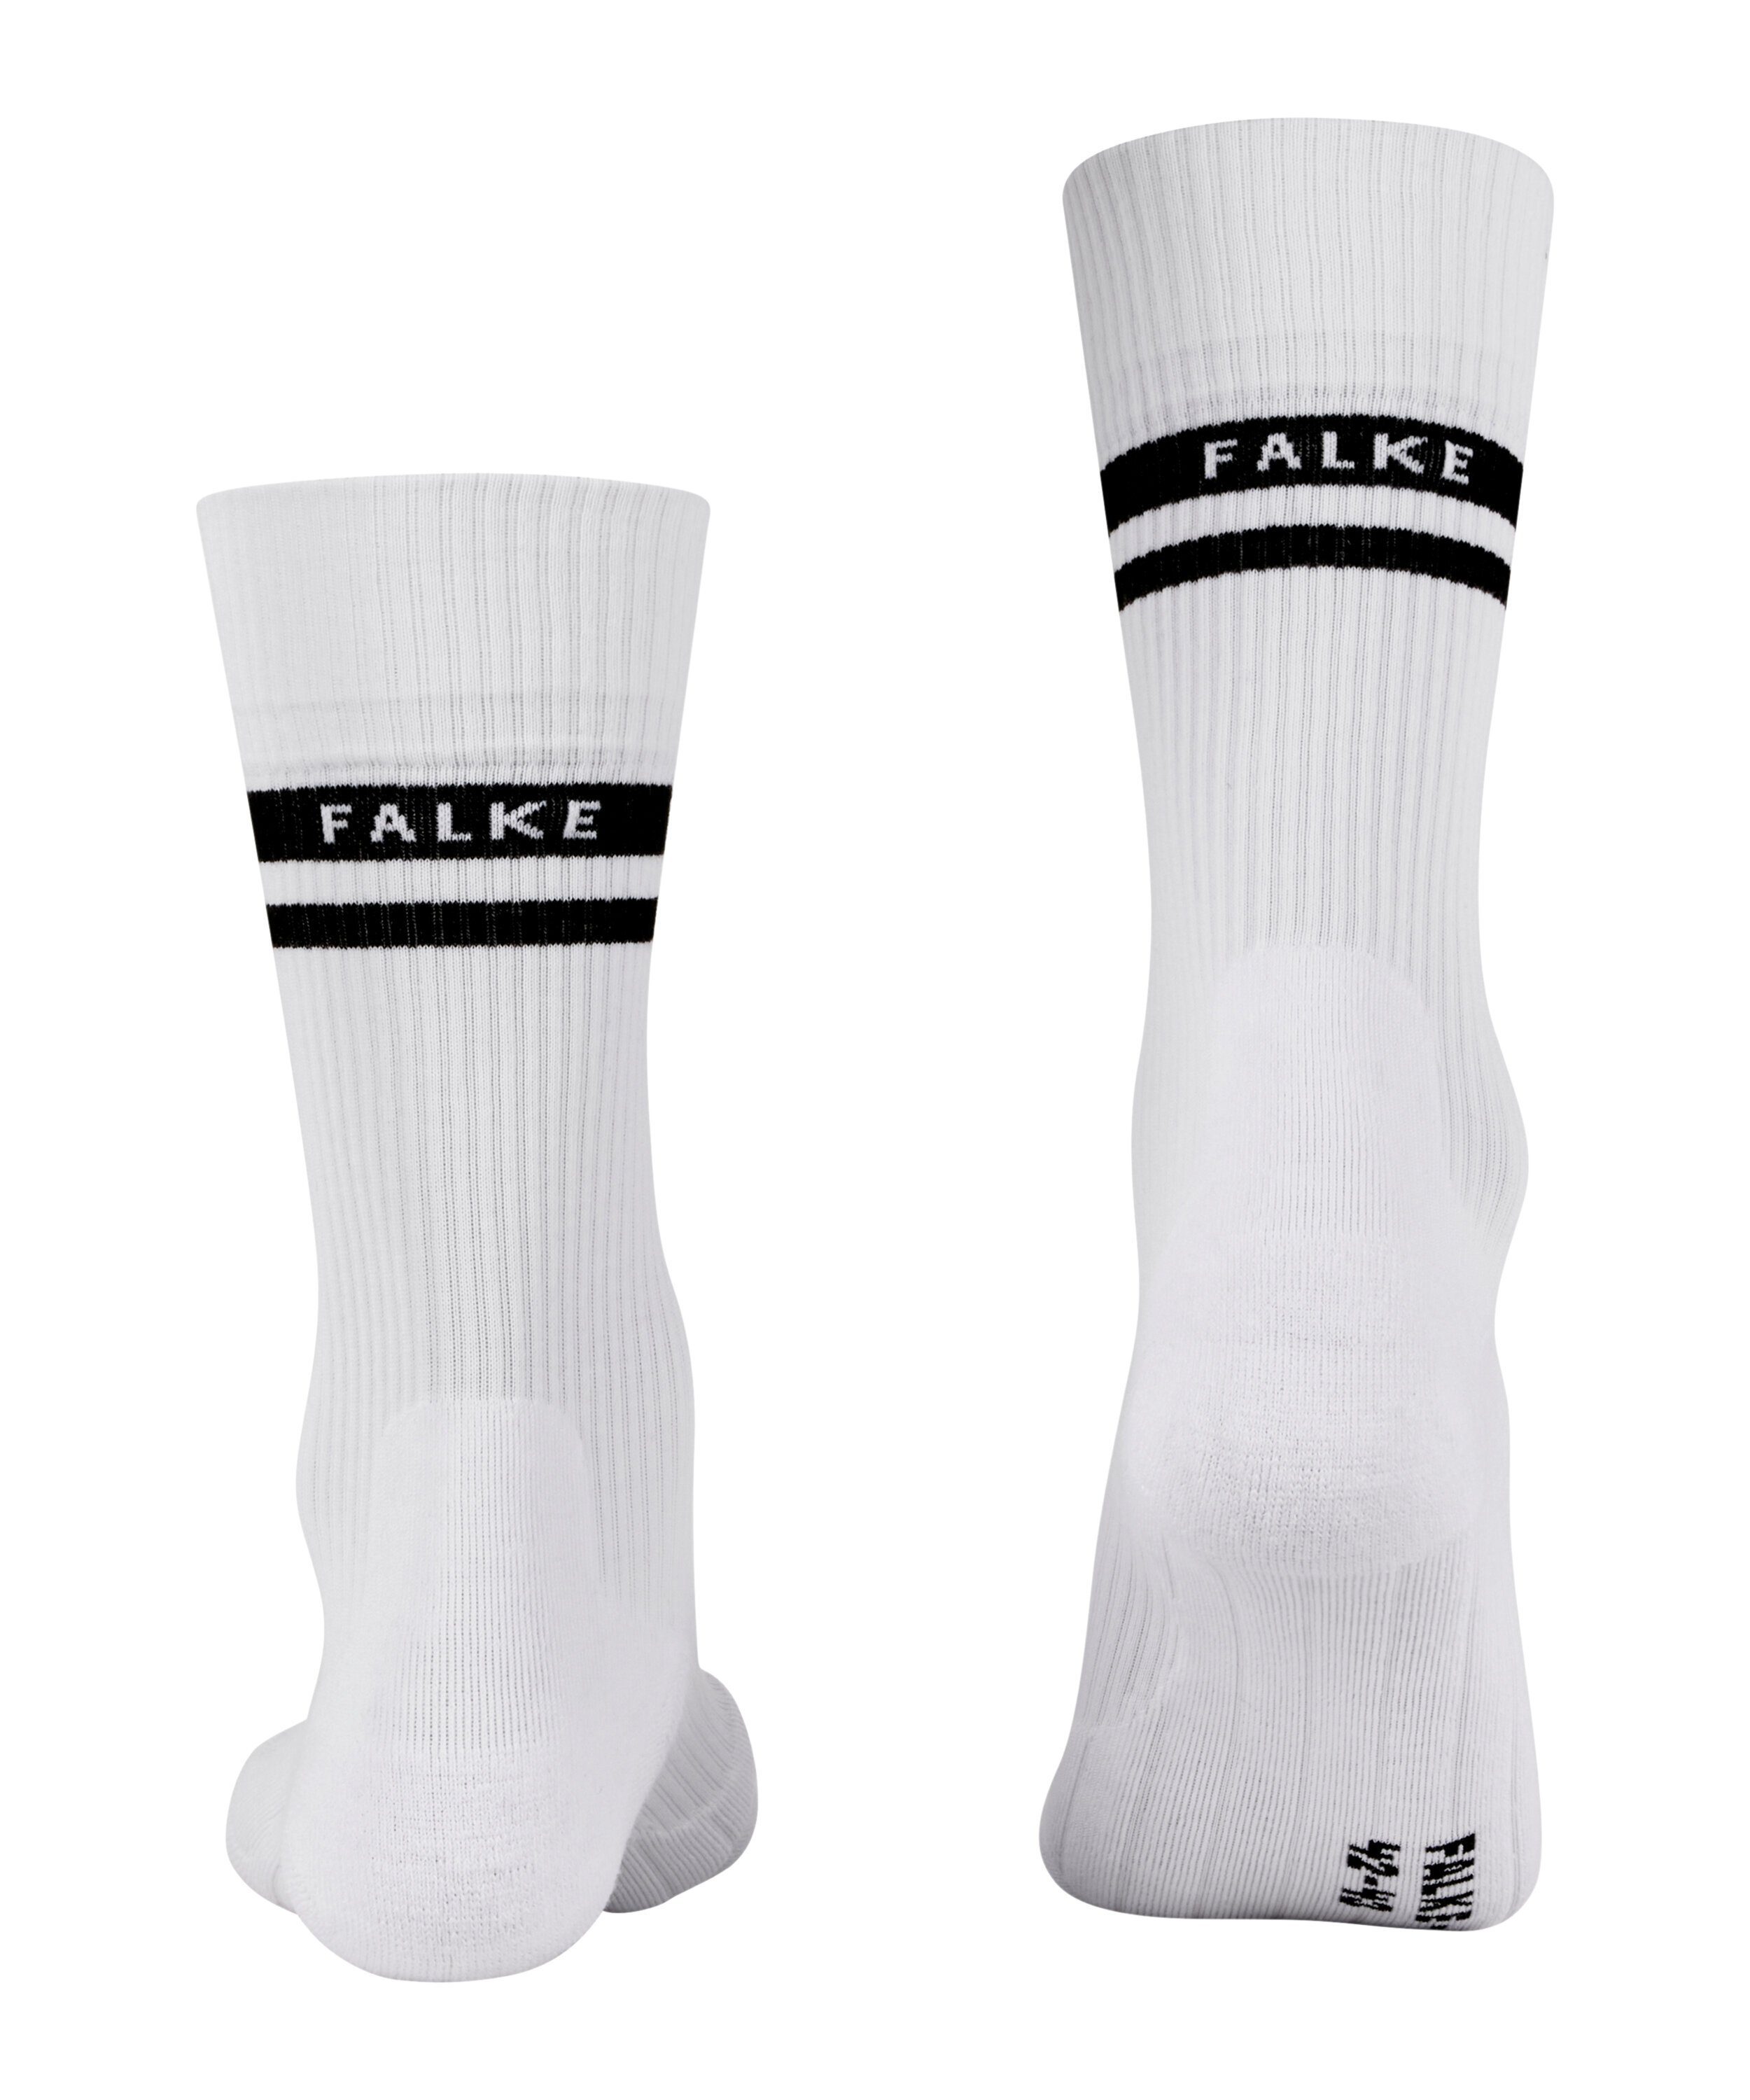 FALKE Tennissocken TE4 für (2003) Stabilisierende Socken white (1-Paar) Women Classic Sandplätze